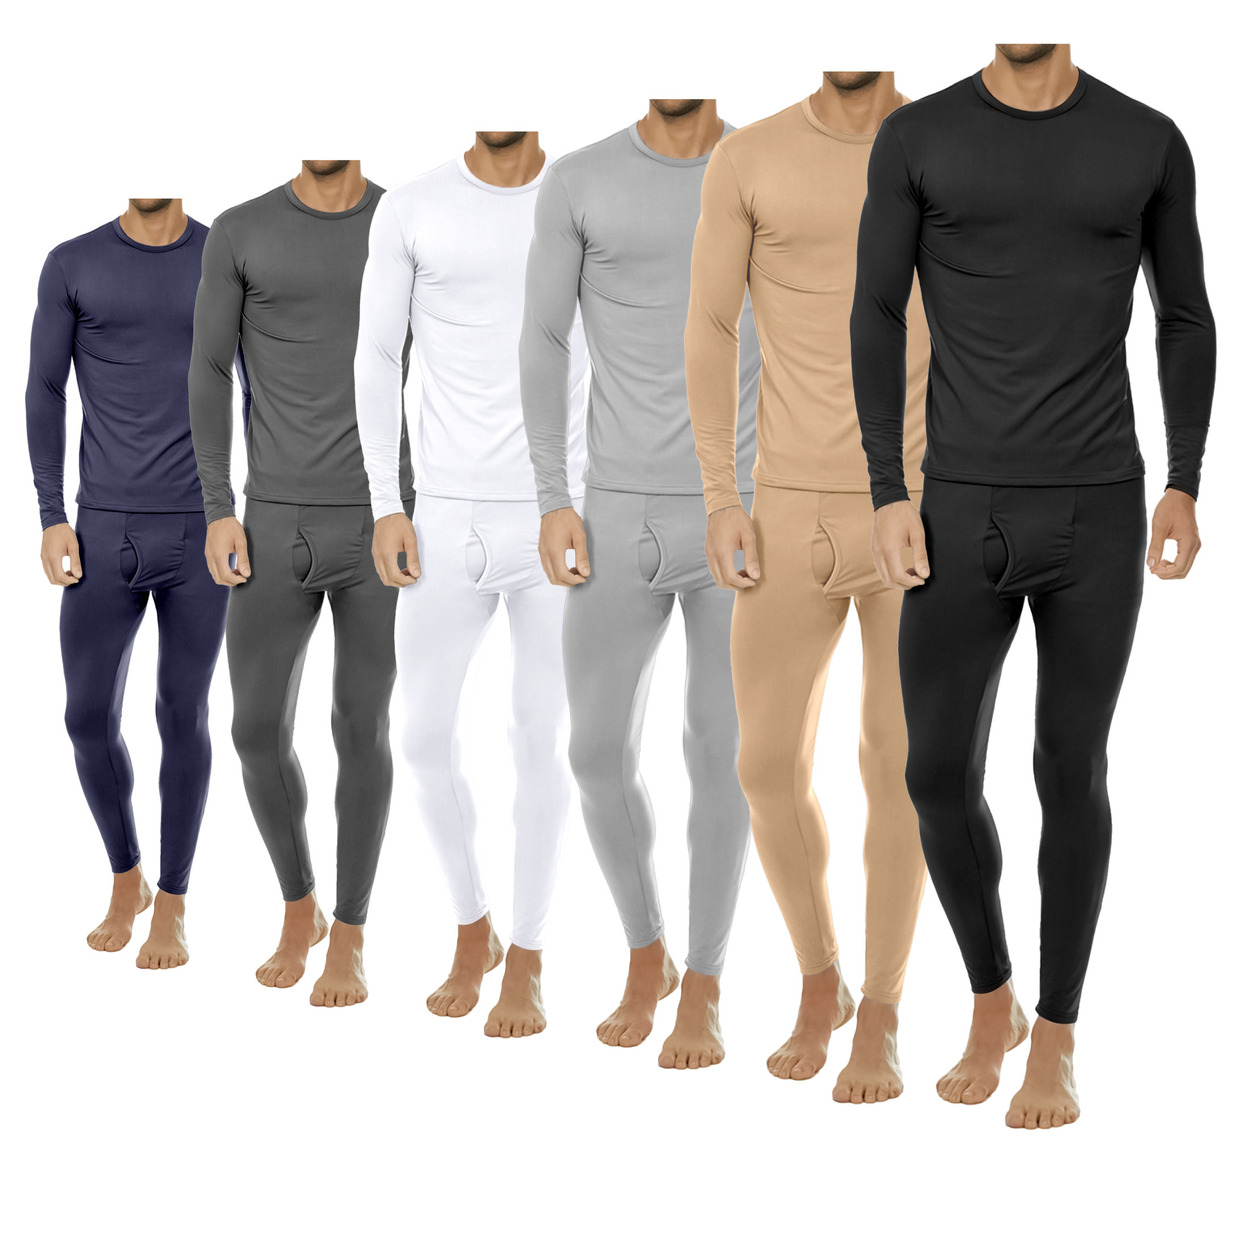 2-Sets: Men's Winter Warm Fleece Lined Thermal Underwear Set For Cold Weather - Black&black, Medium